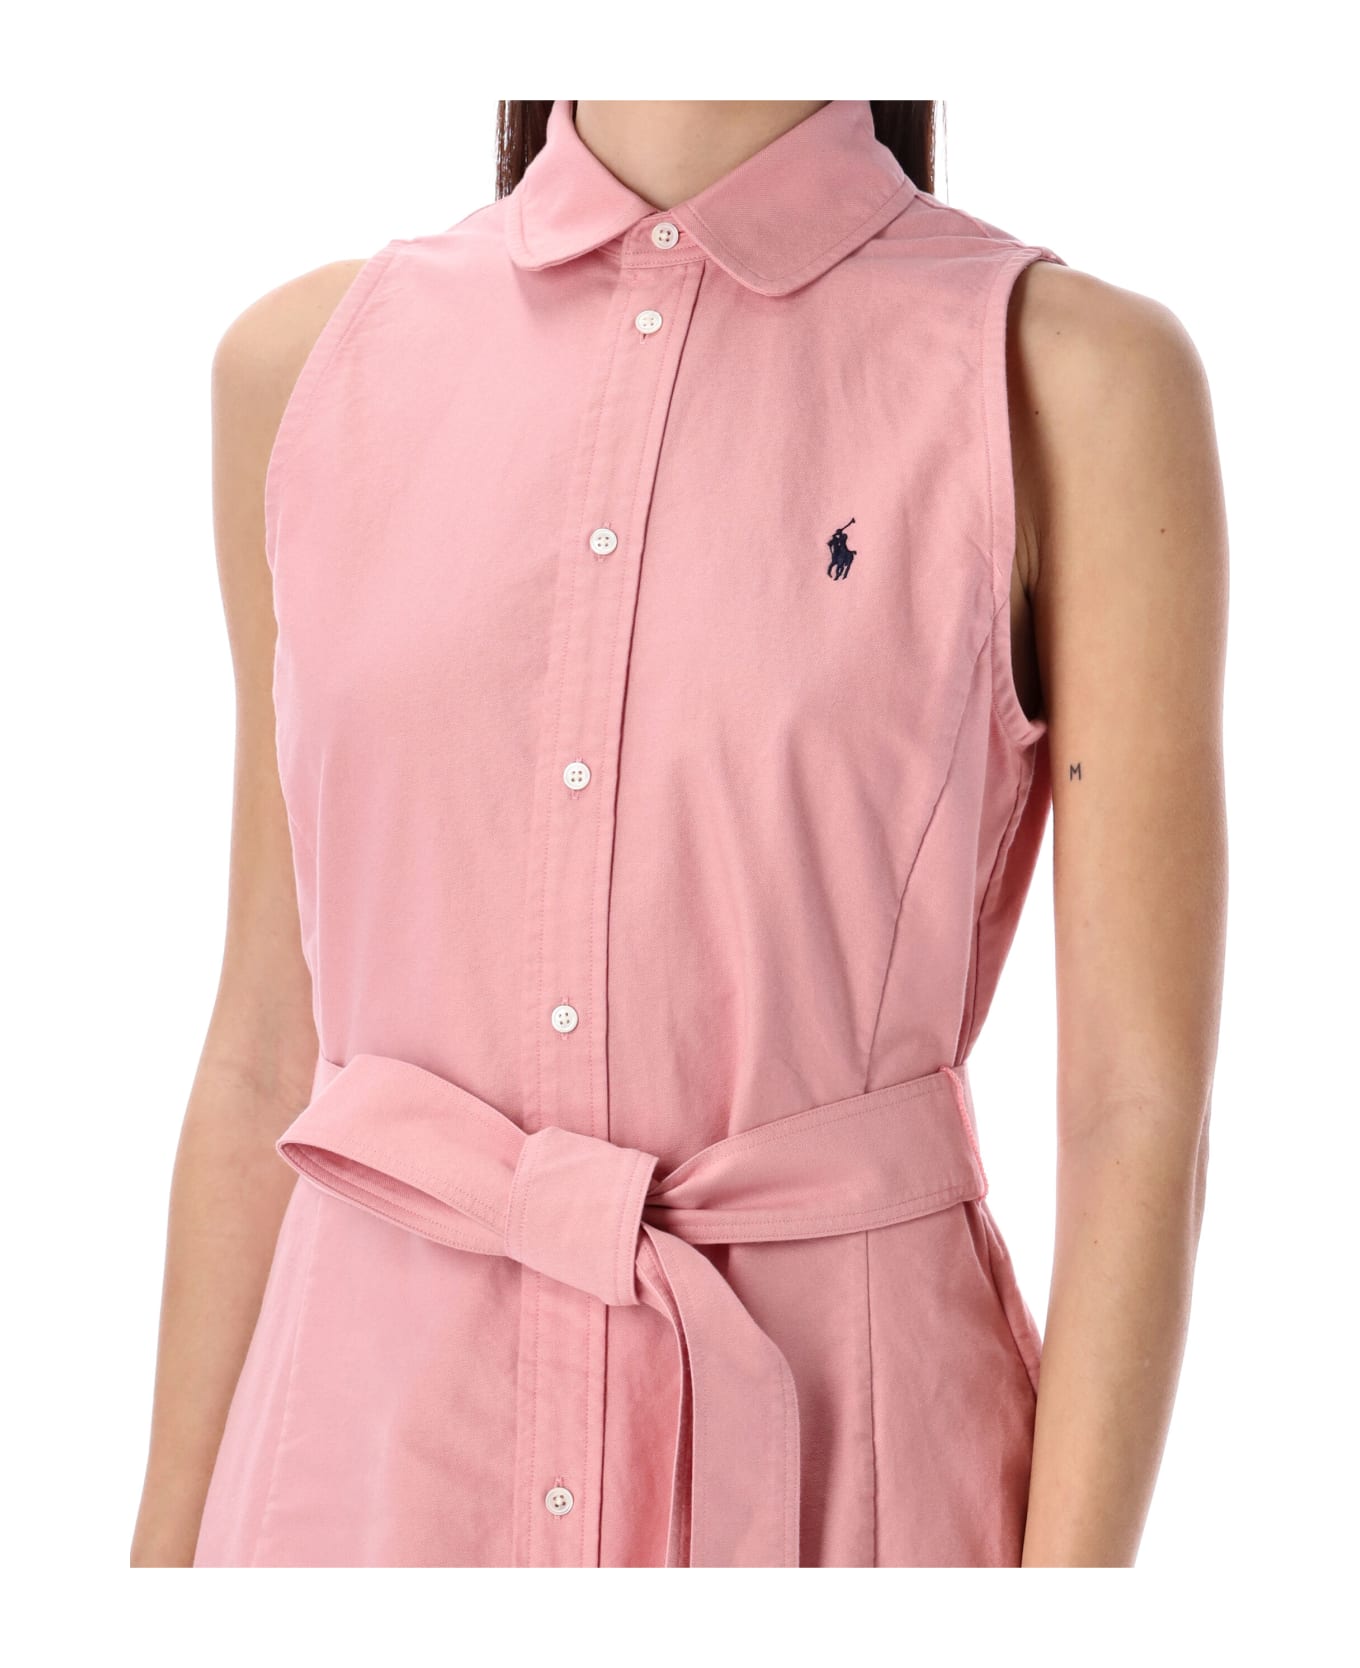 Polo Ralph Lauren Belted Sleeveless Shirtdress - ADIRONDACK ROSE